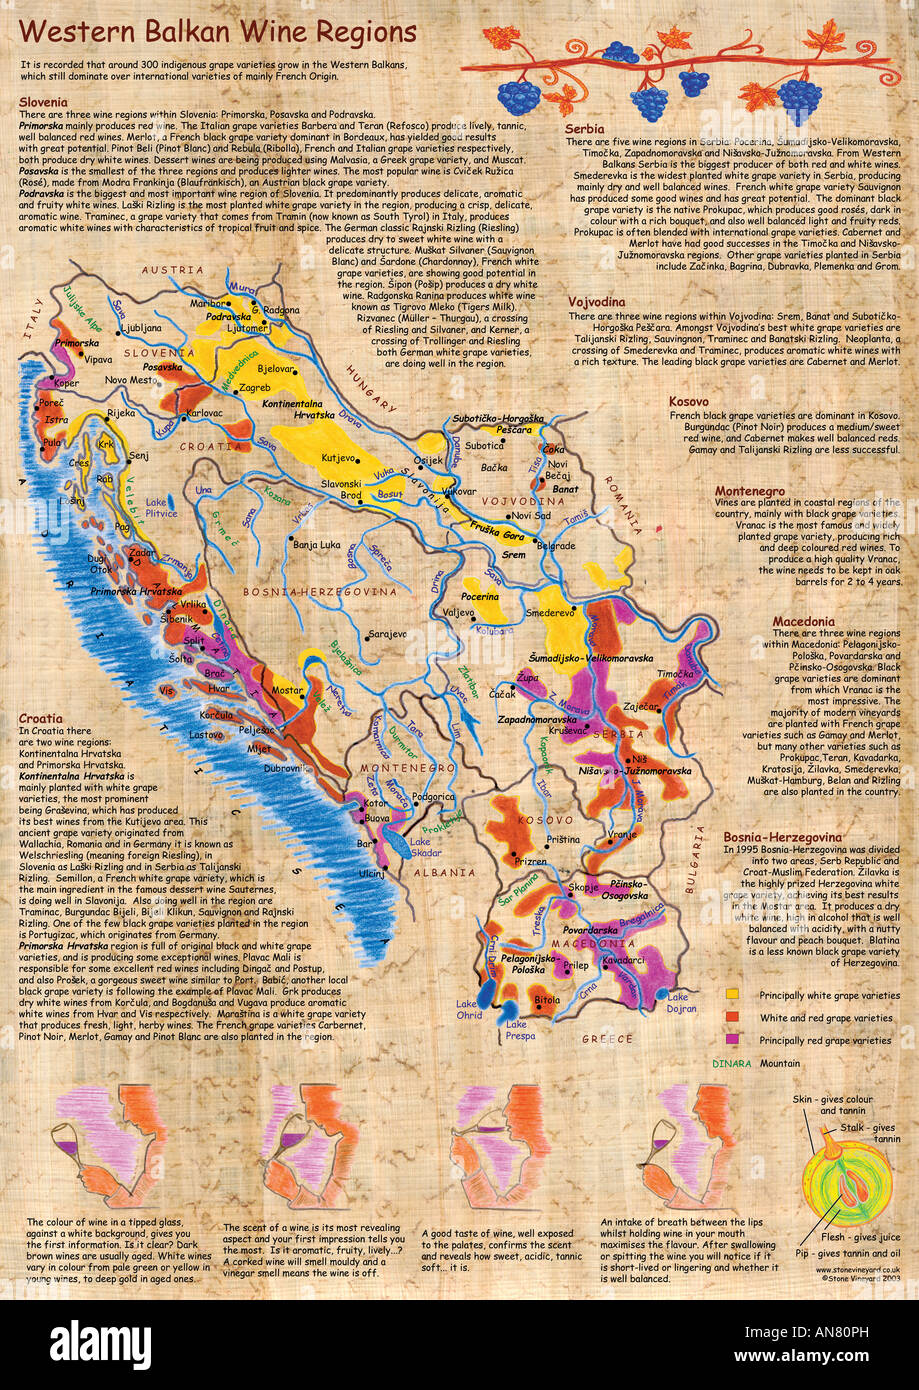 Illustrated Map Of Western Balkan Wine Regions Croatia